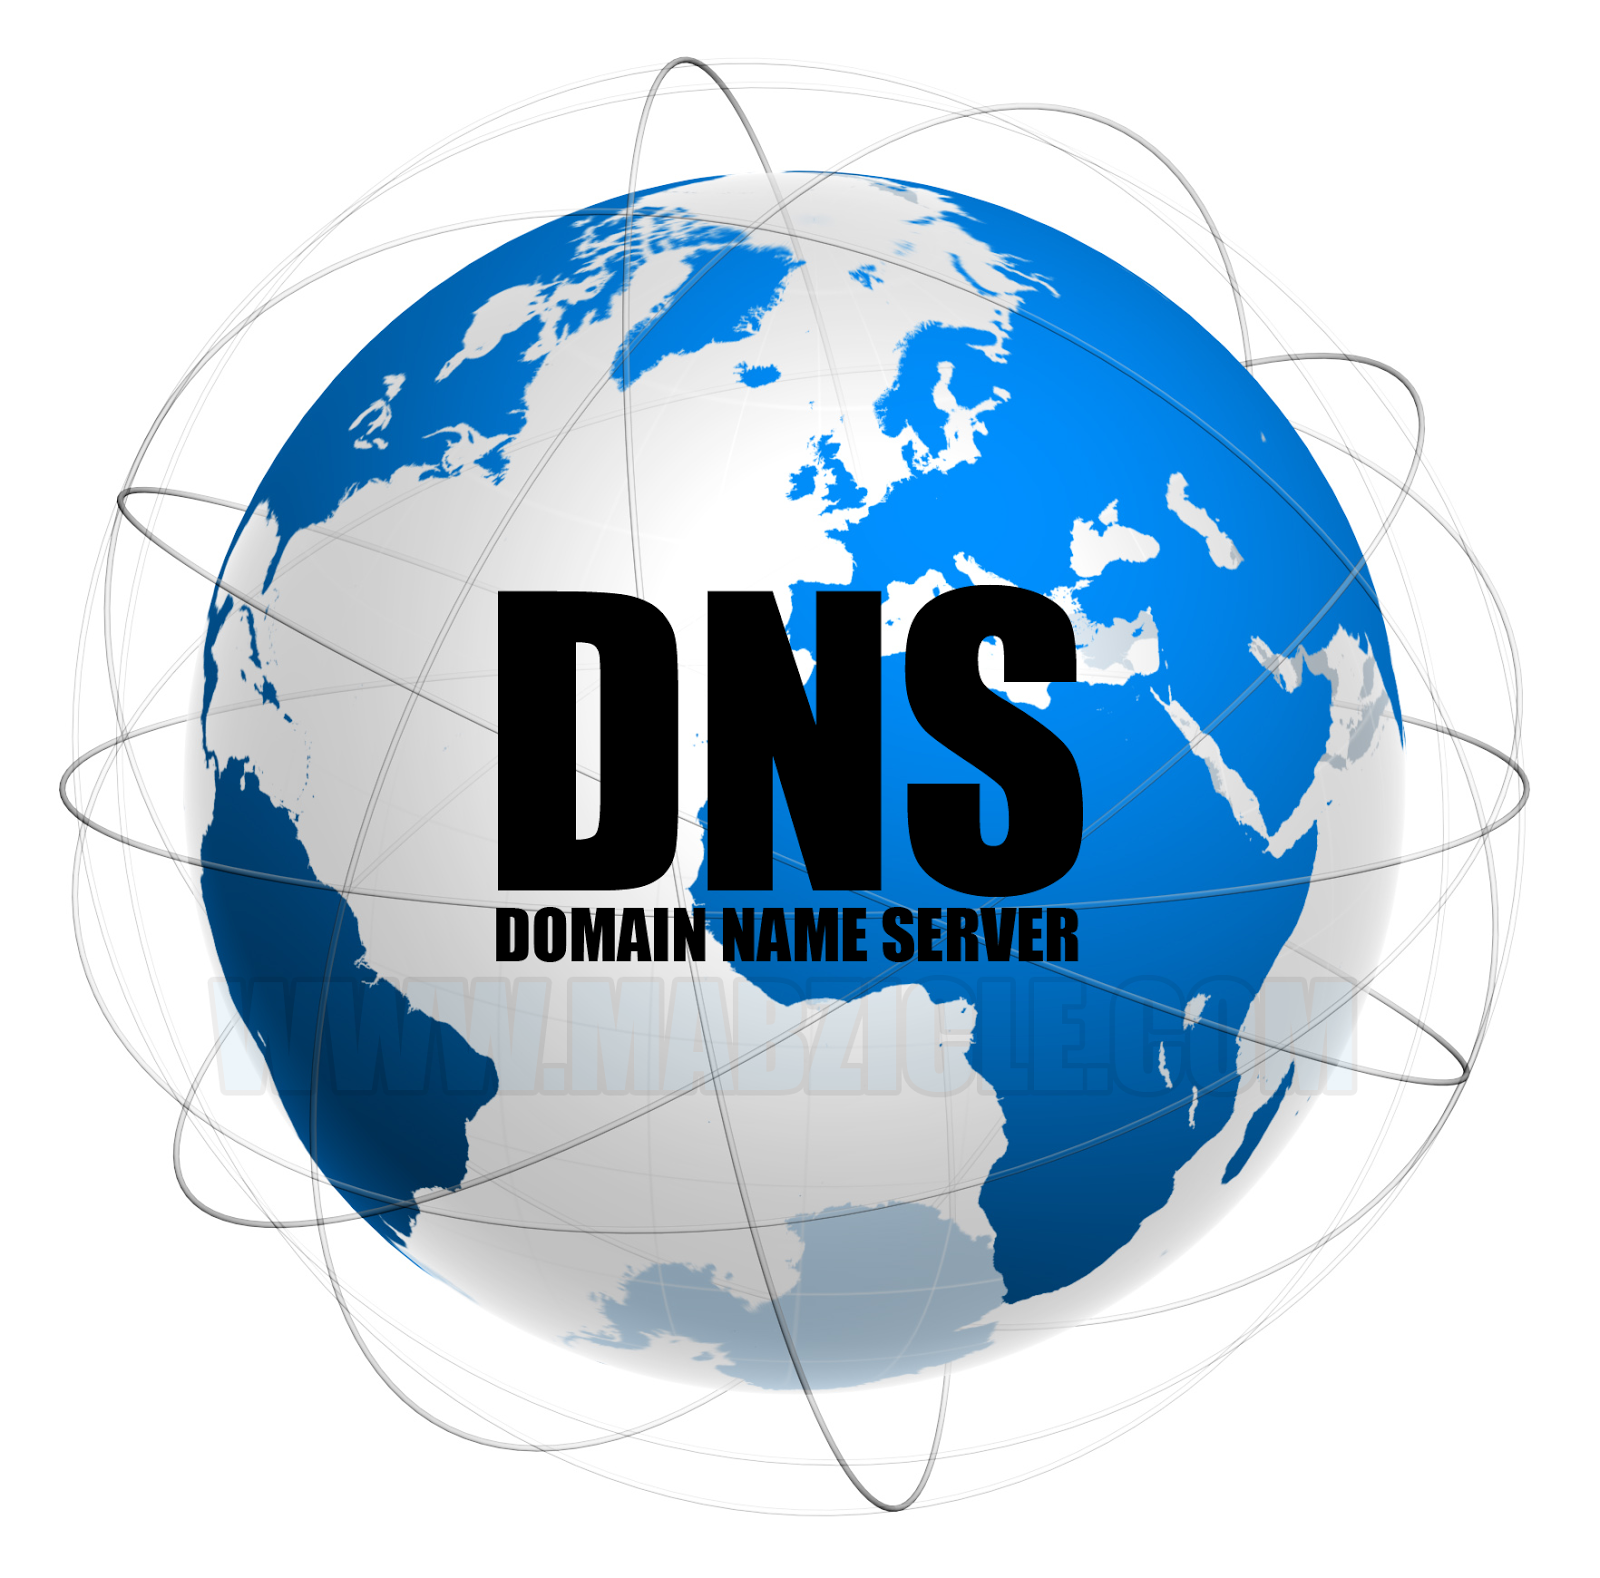 dns - domain name server